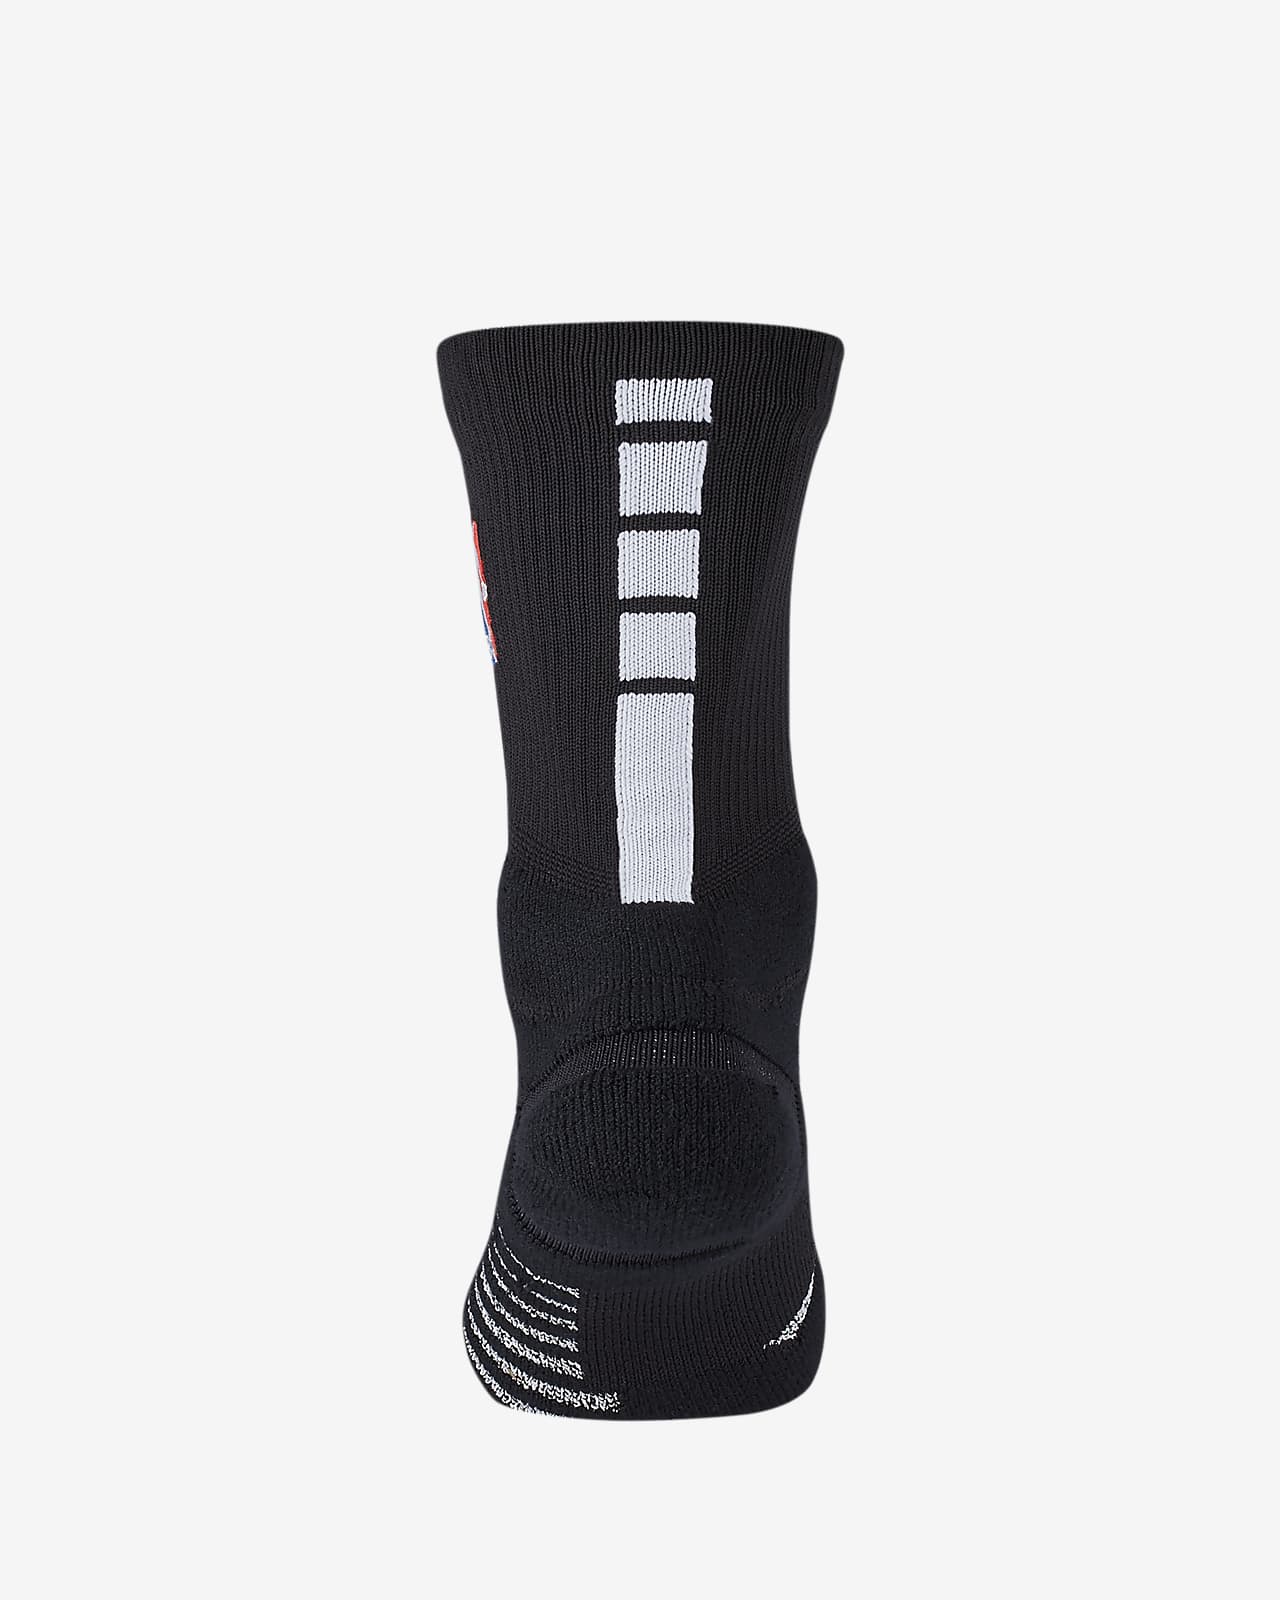 Titan 22 - Nike NBA Power Grip Crew Php 995.00 Shop now